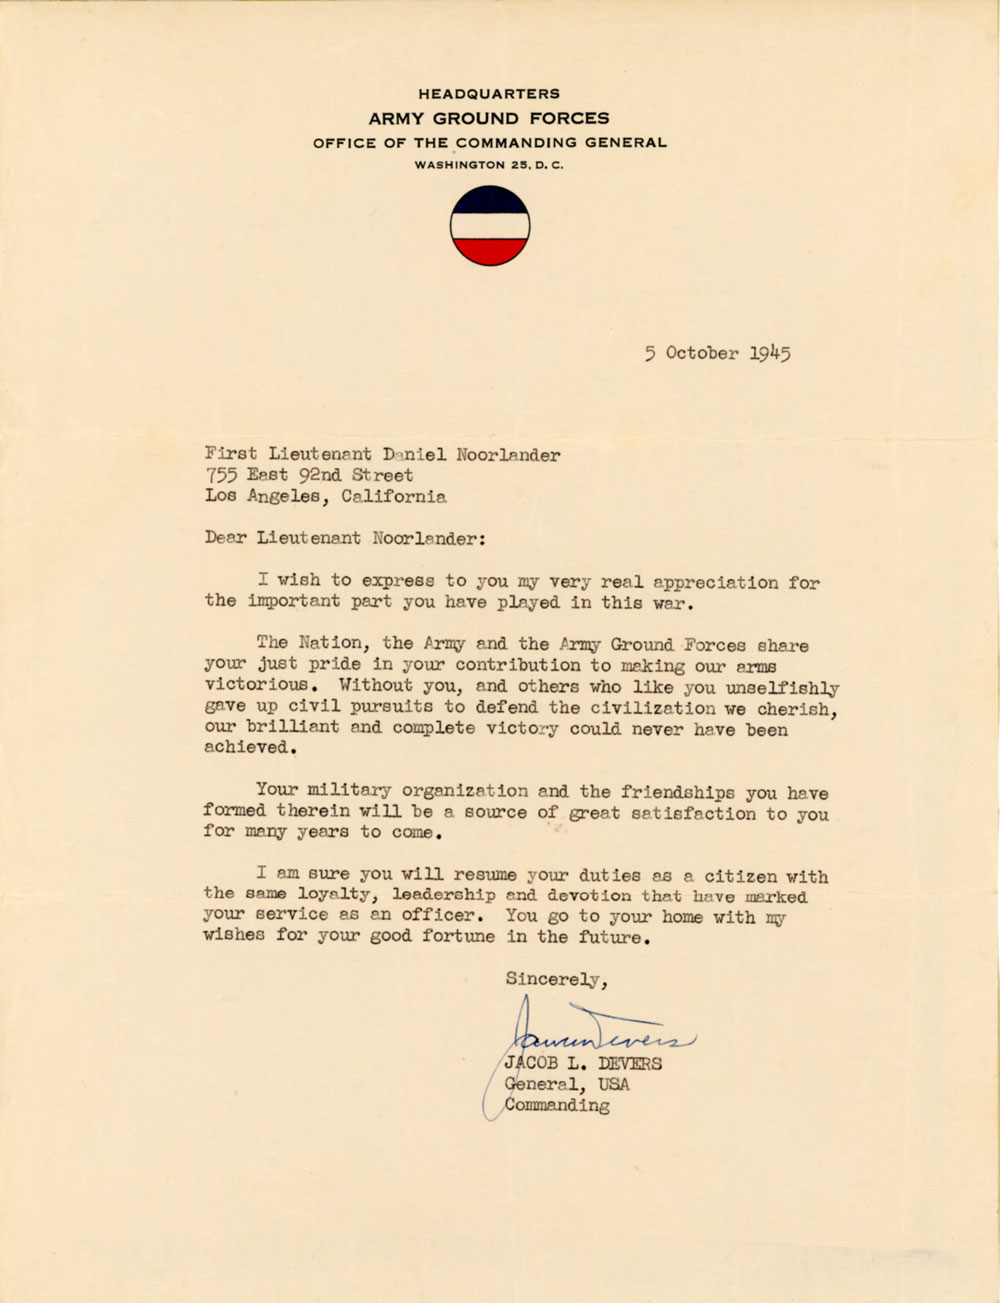 General Devers Commendation Letter